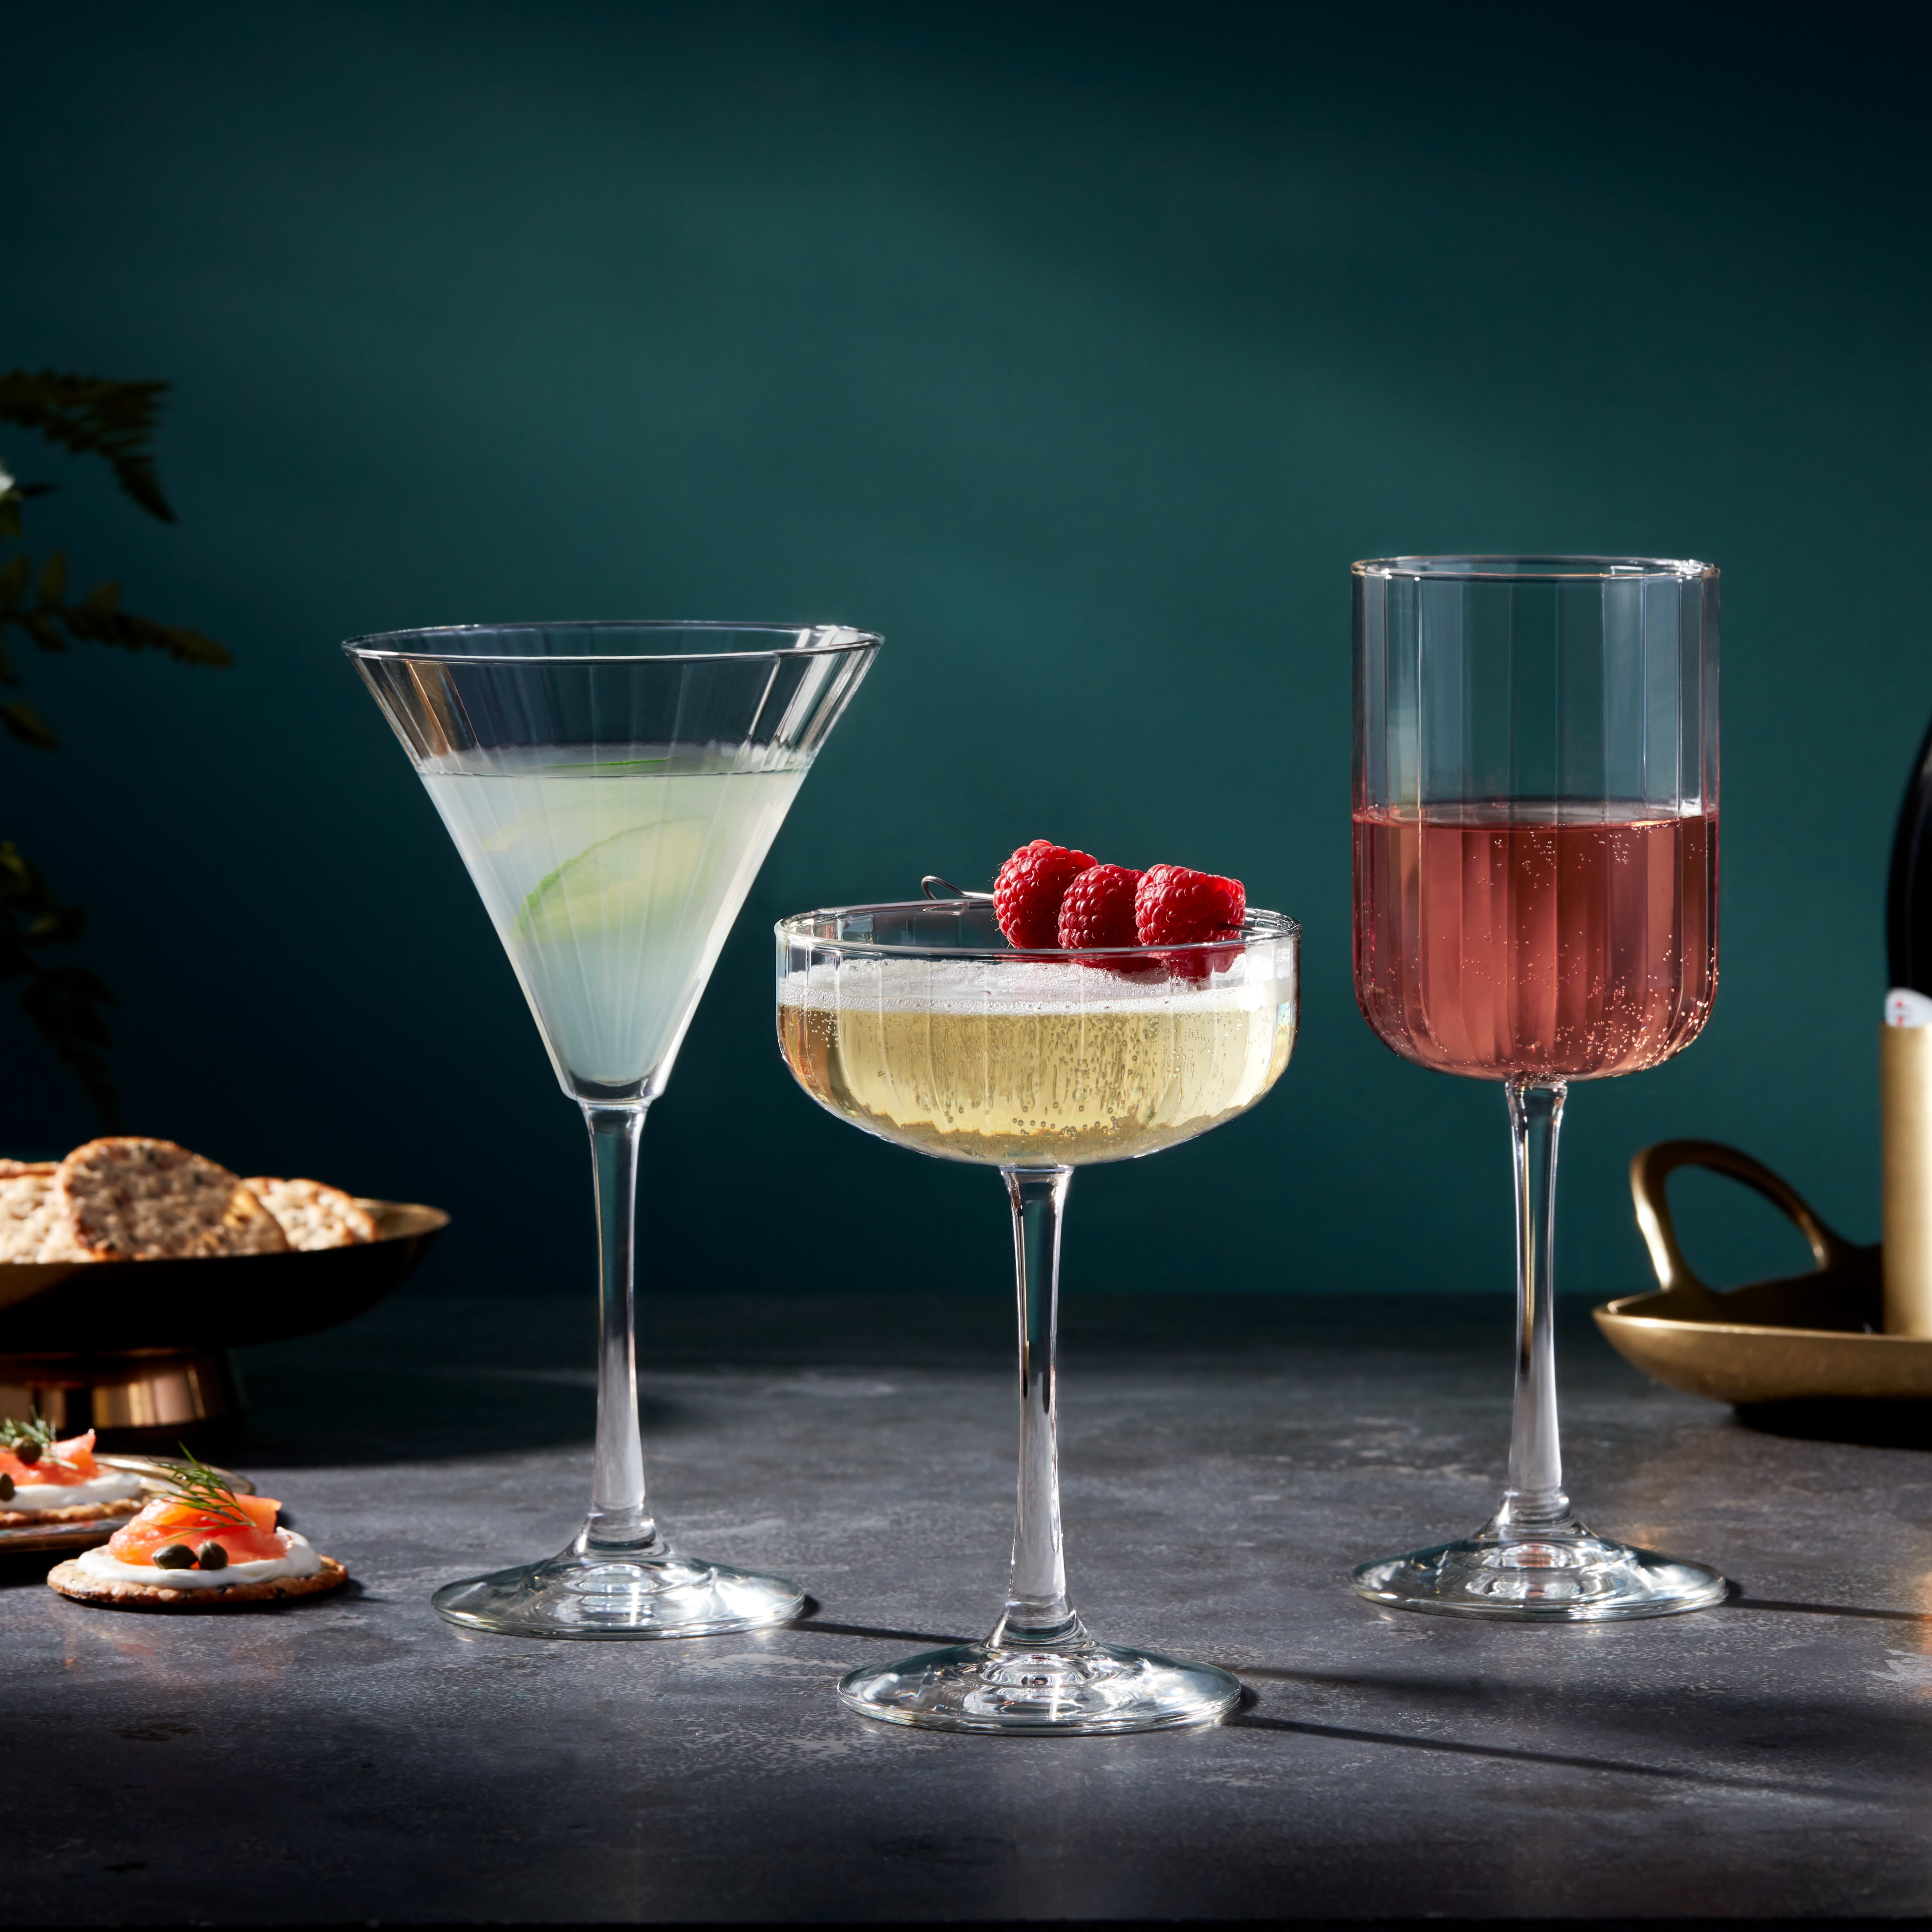 Libbey 8454 Citation 4.5 Ounce Martini Glass